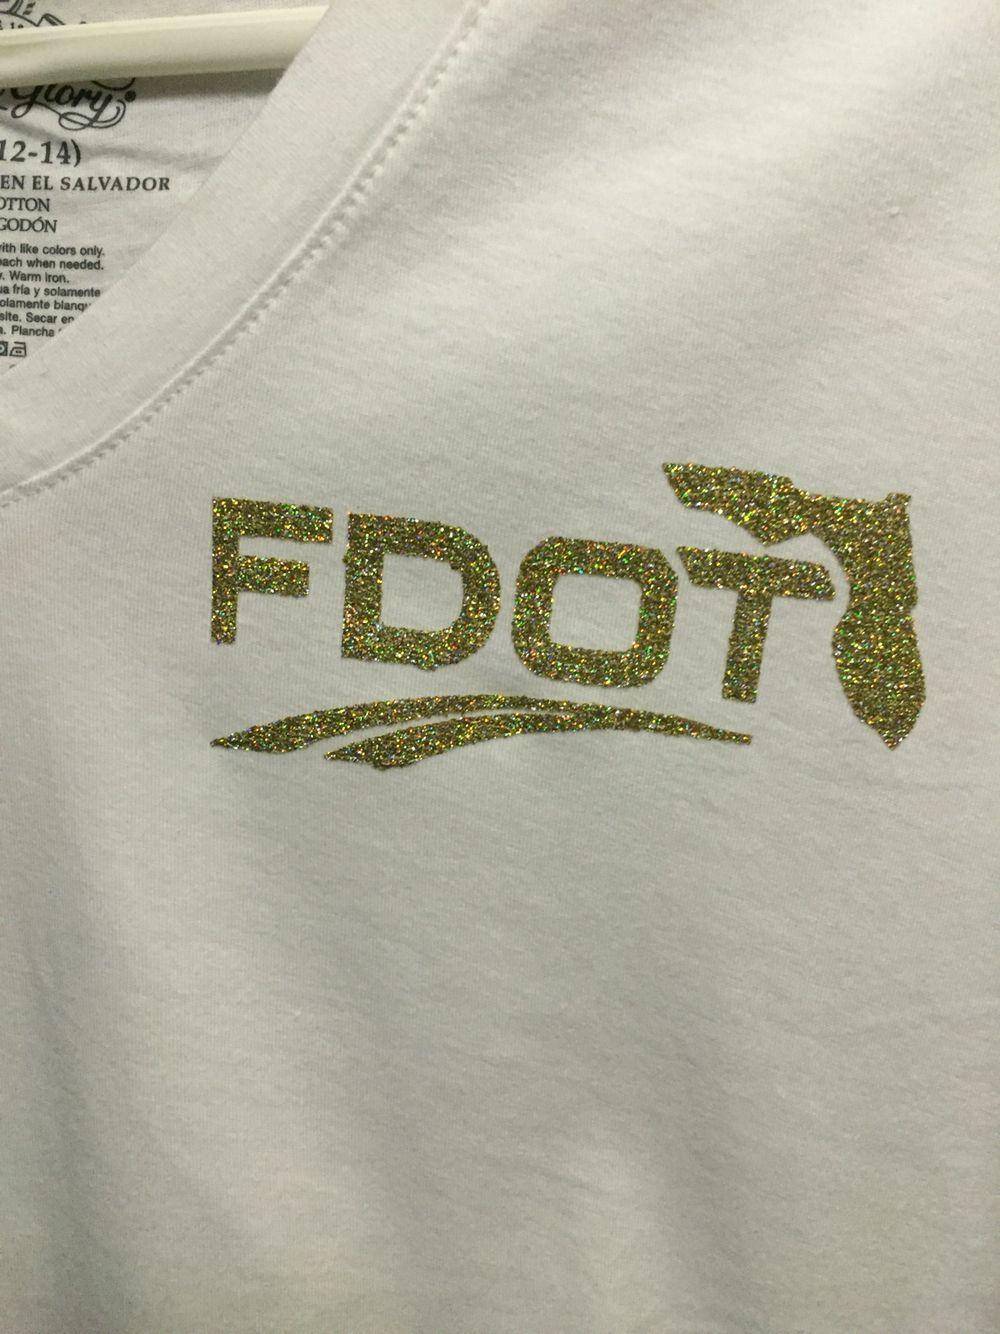 FDOT Logo - My Cricut Florida Department of Transportation (FDOT) Logo shirt ...